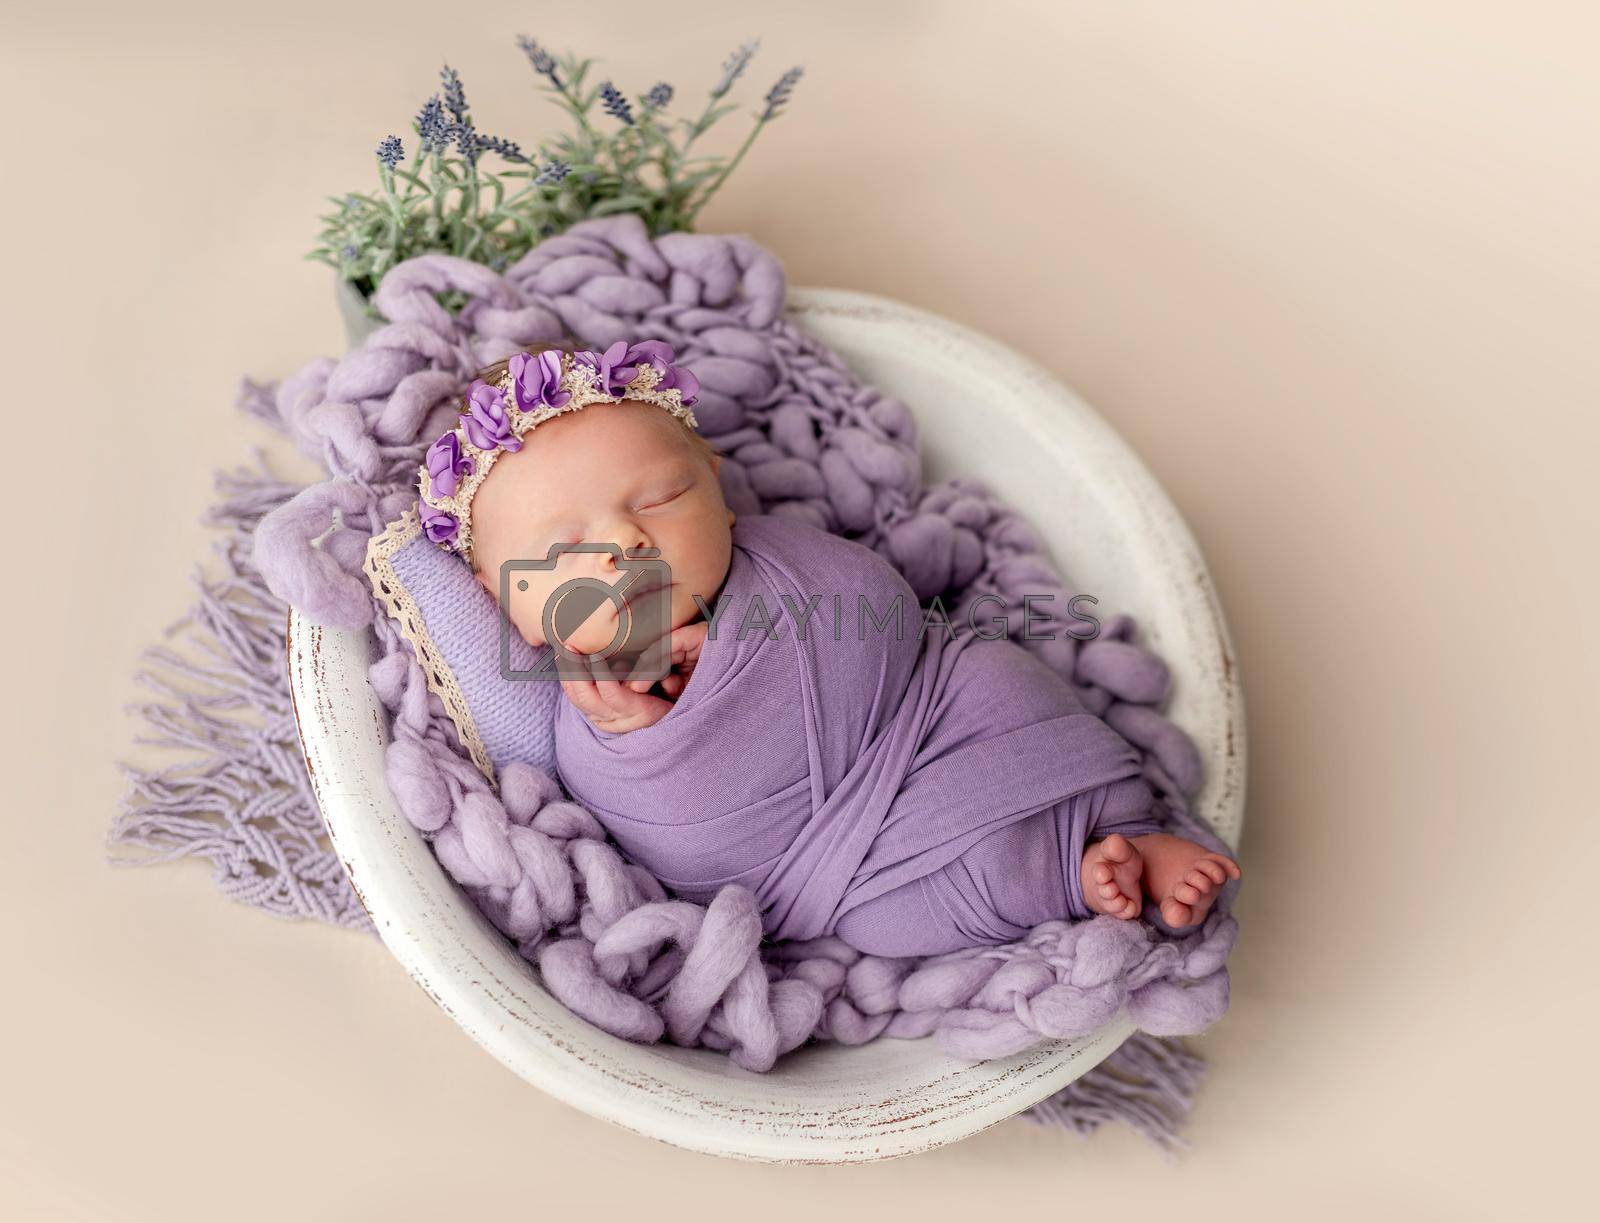 Royalty free image of Newborn sleeping wrapped in violet blanket by tan4ikk1